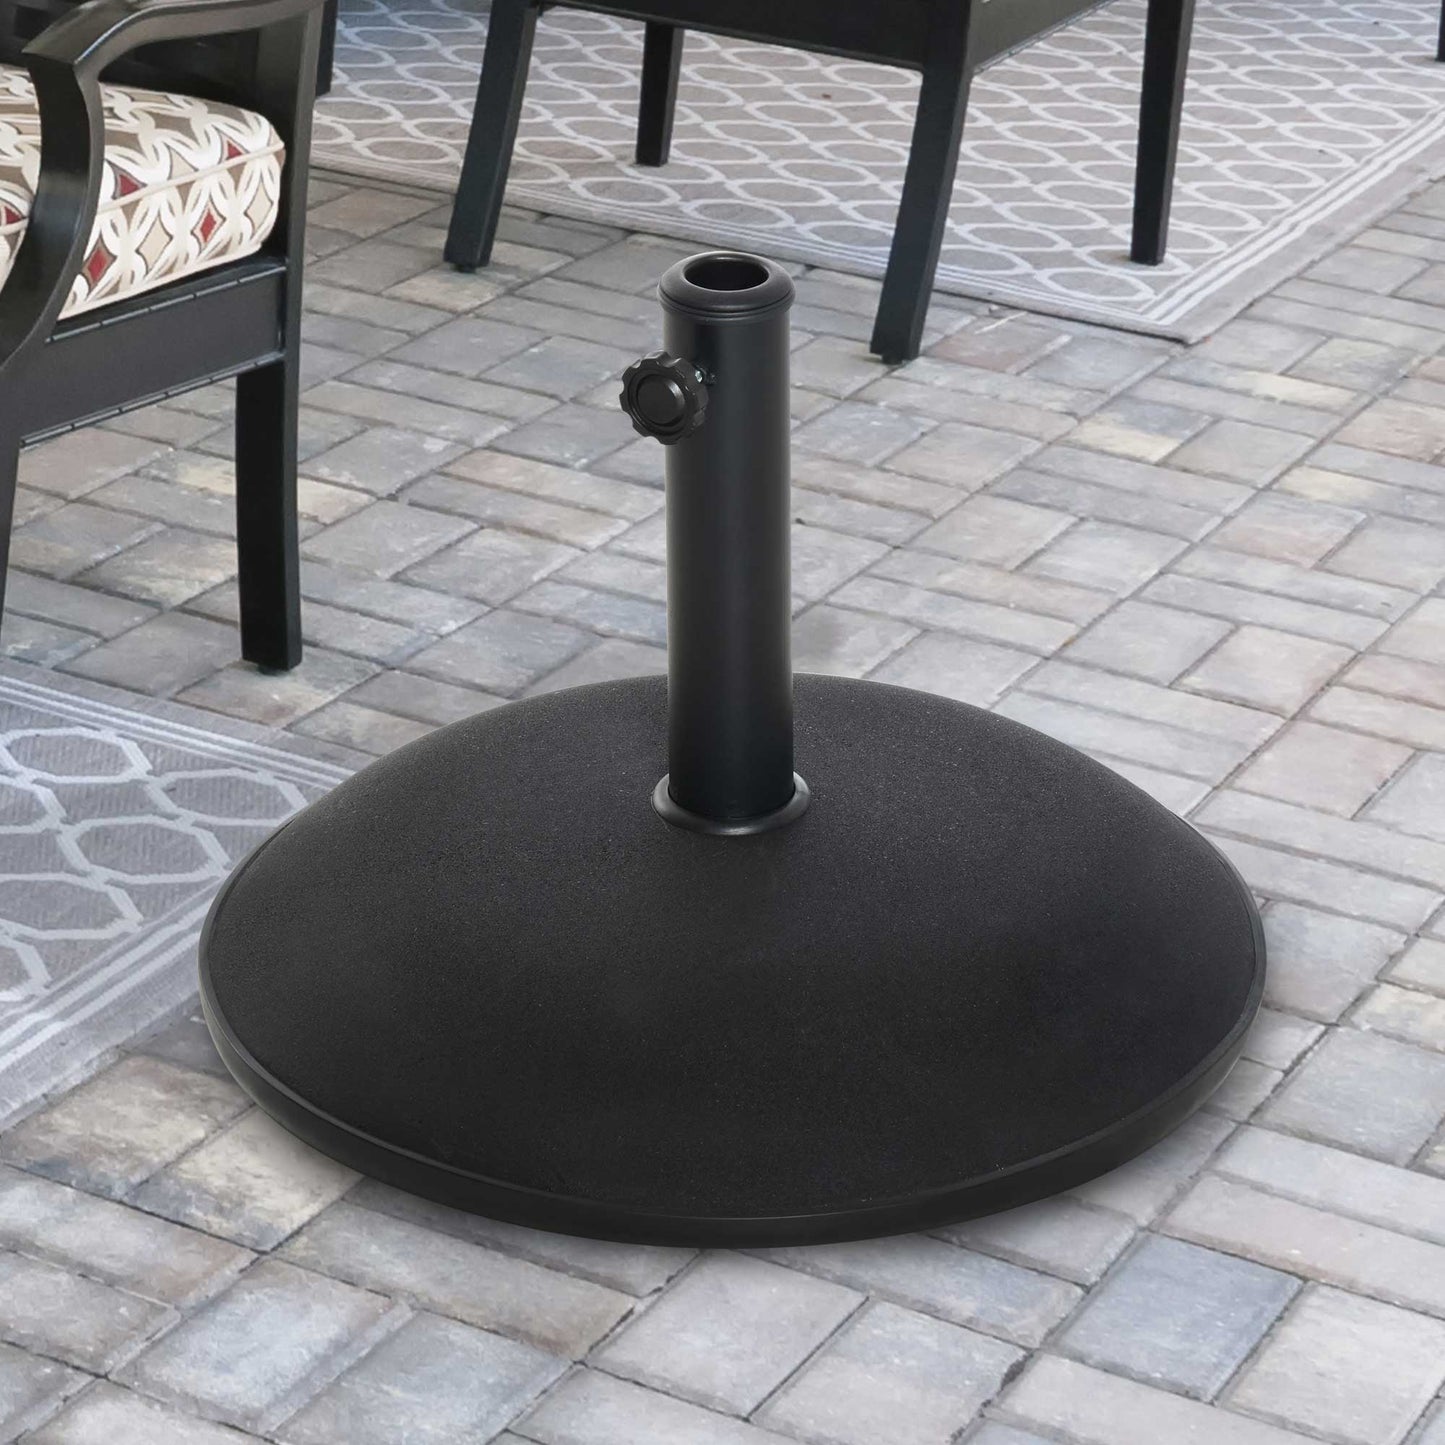 Outsunny 25kgs Round Umbrella Base Concrete Parasol Weight Stand Patio Outdoor Black Dia 50cm